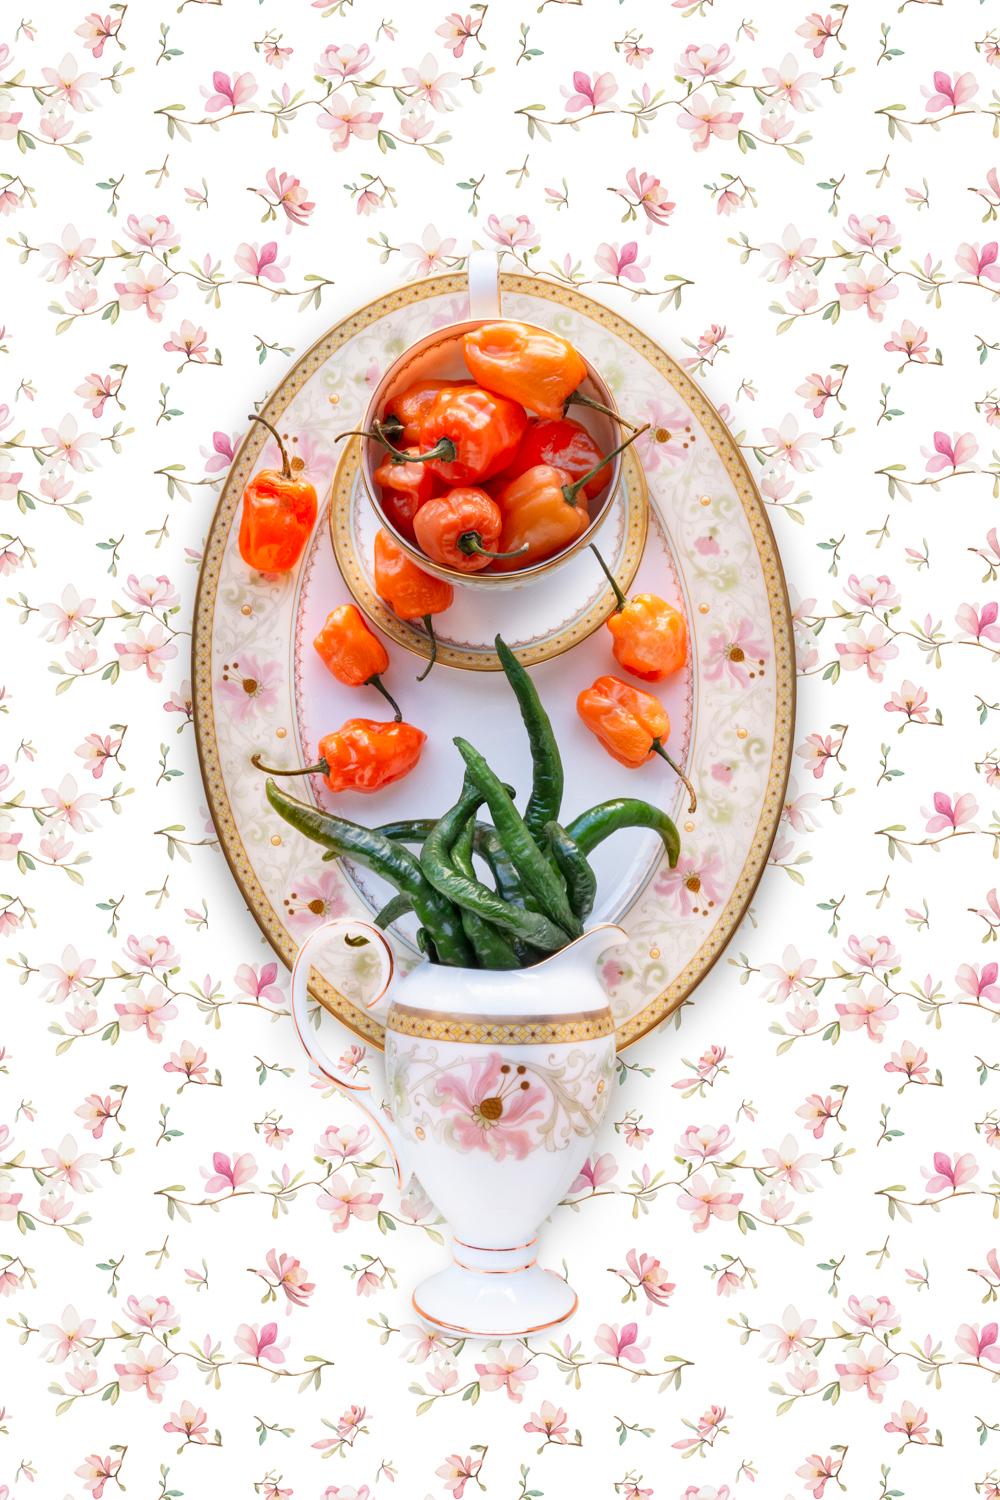 JP Terlizzi Still-Life Photograph - Noritake Blooming Splendor with Pepper, 2019